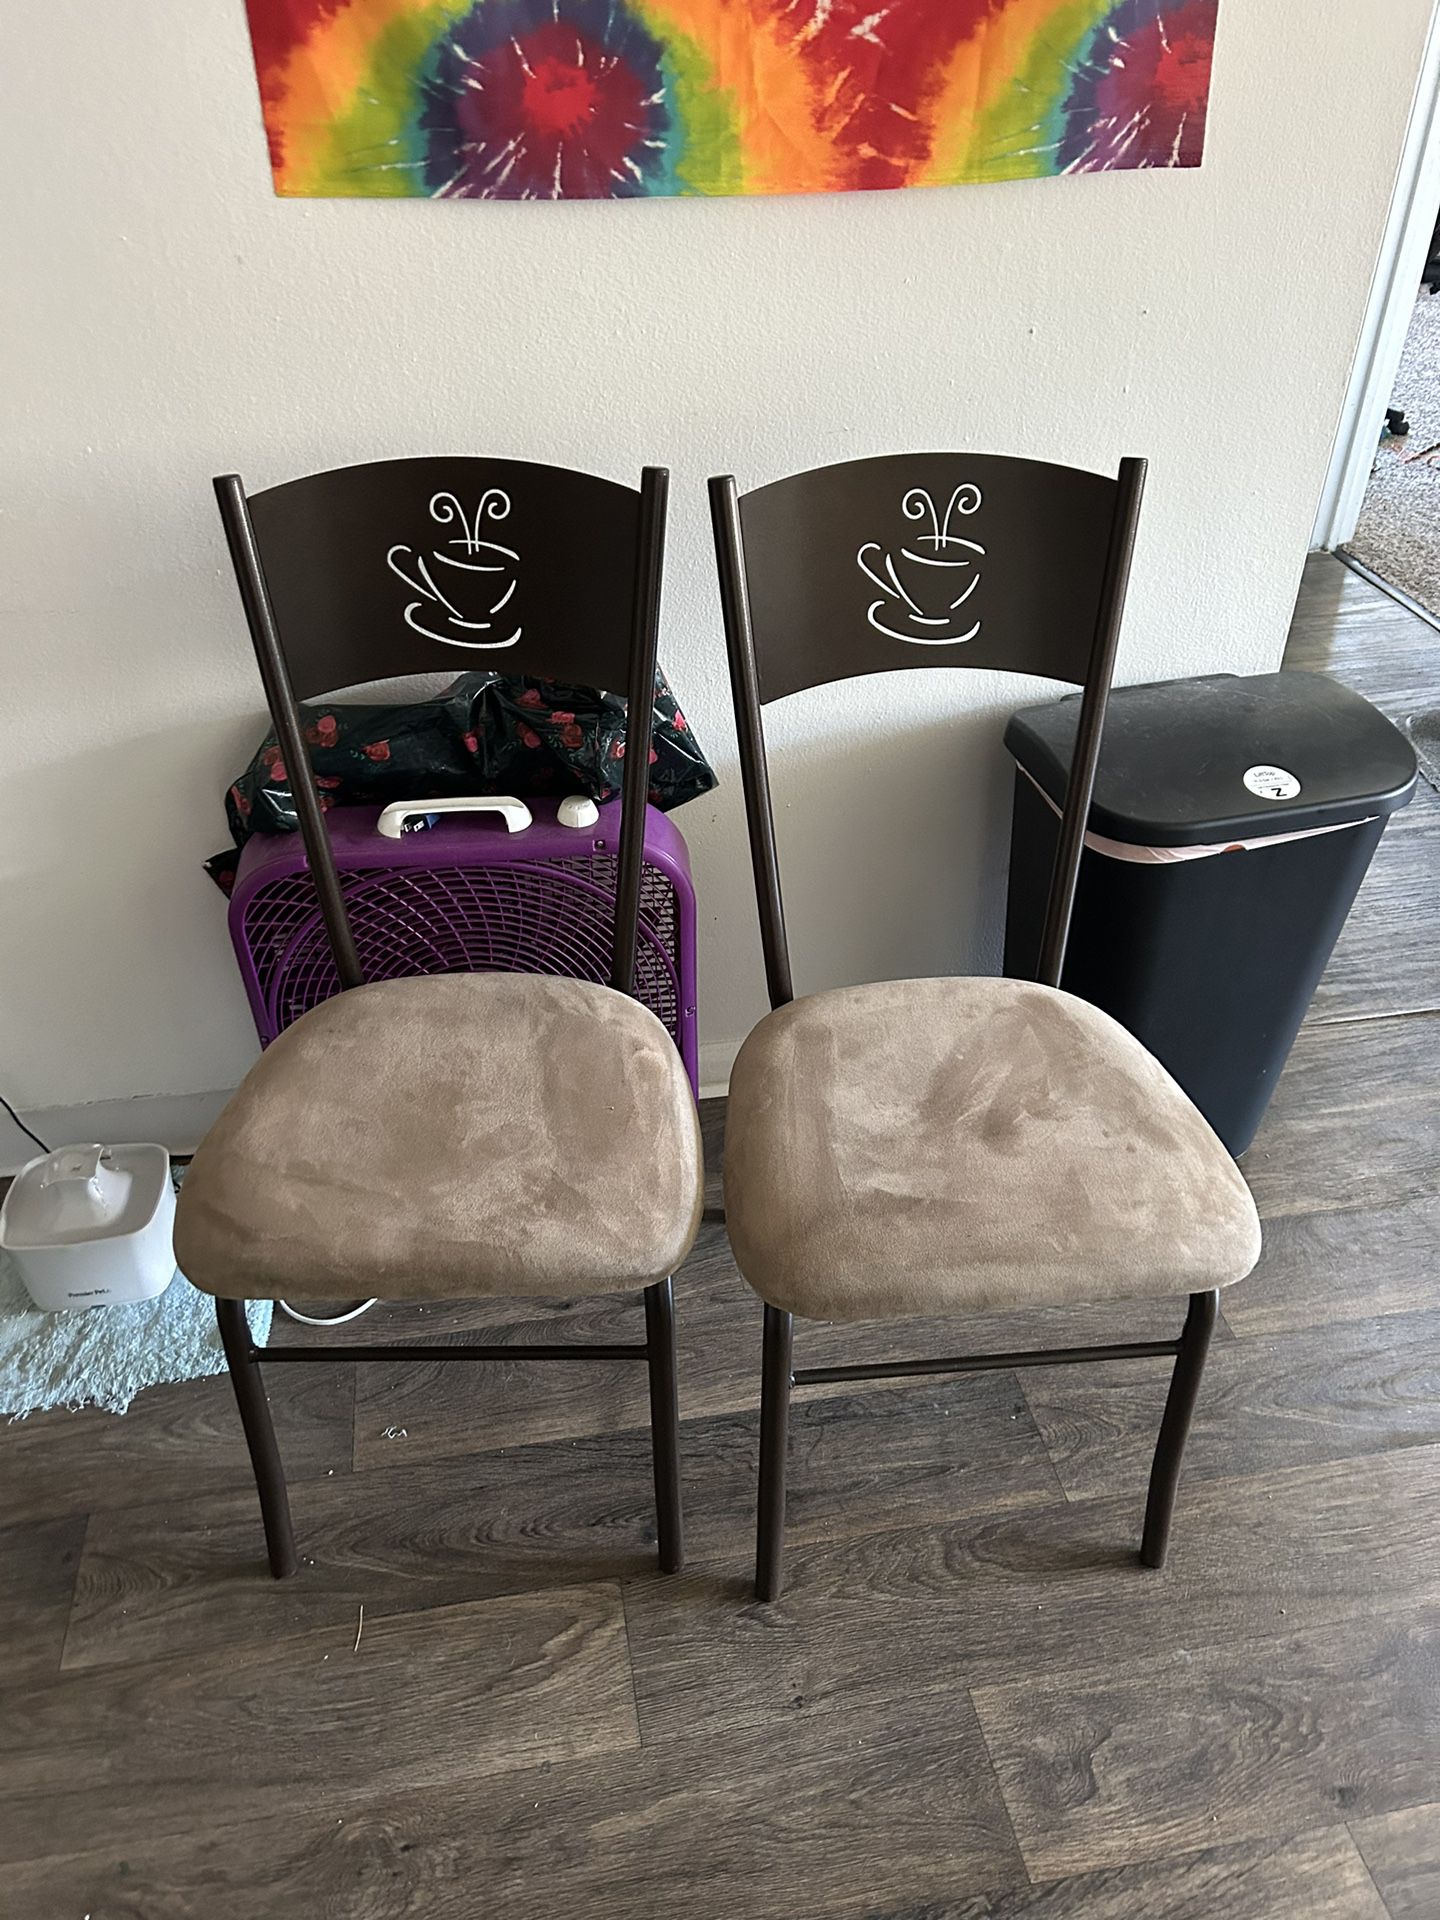 Coffee Bean Chairs